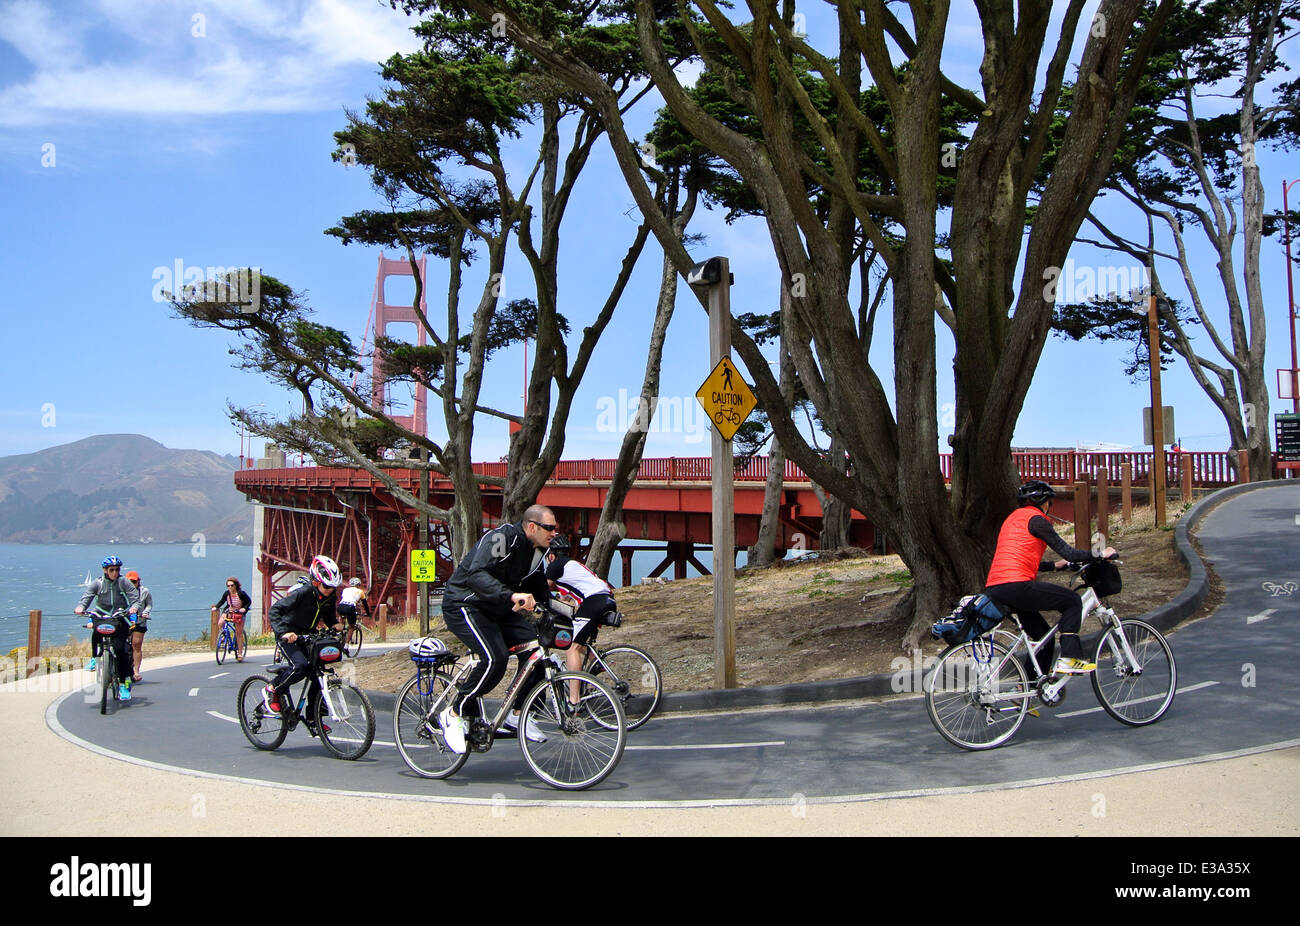 cyclists on rental bikes riding on bike path leading up to Golden Gate Bridge Stock Photo